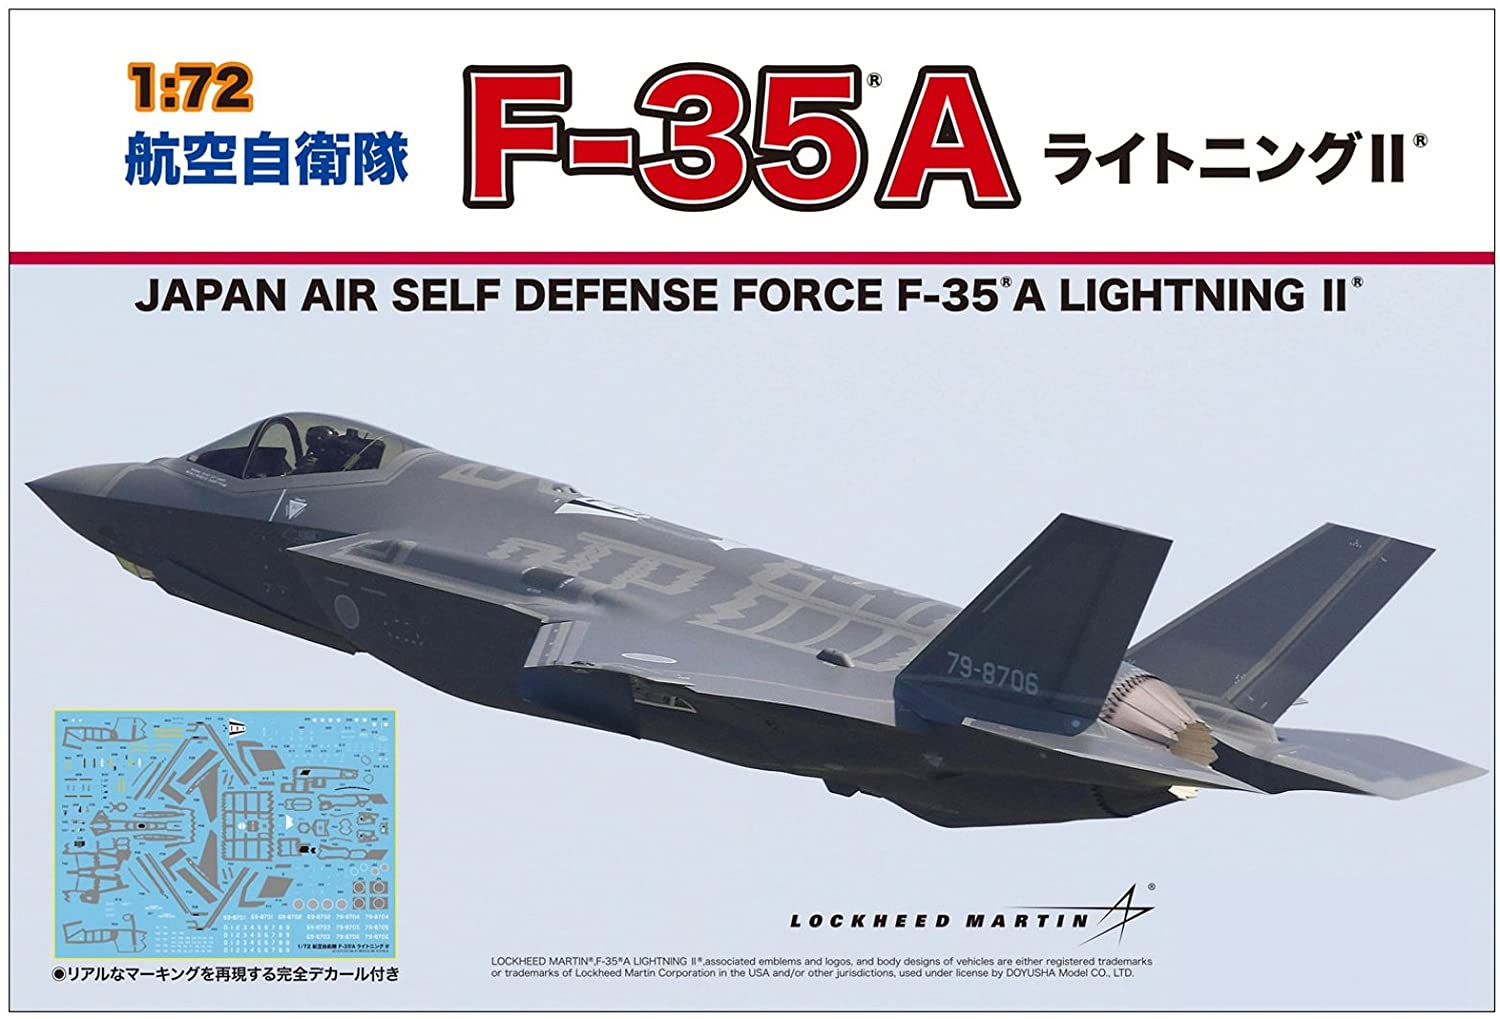 JASDF F-35A Lightning II